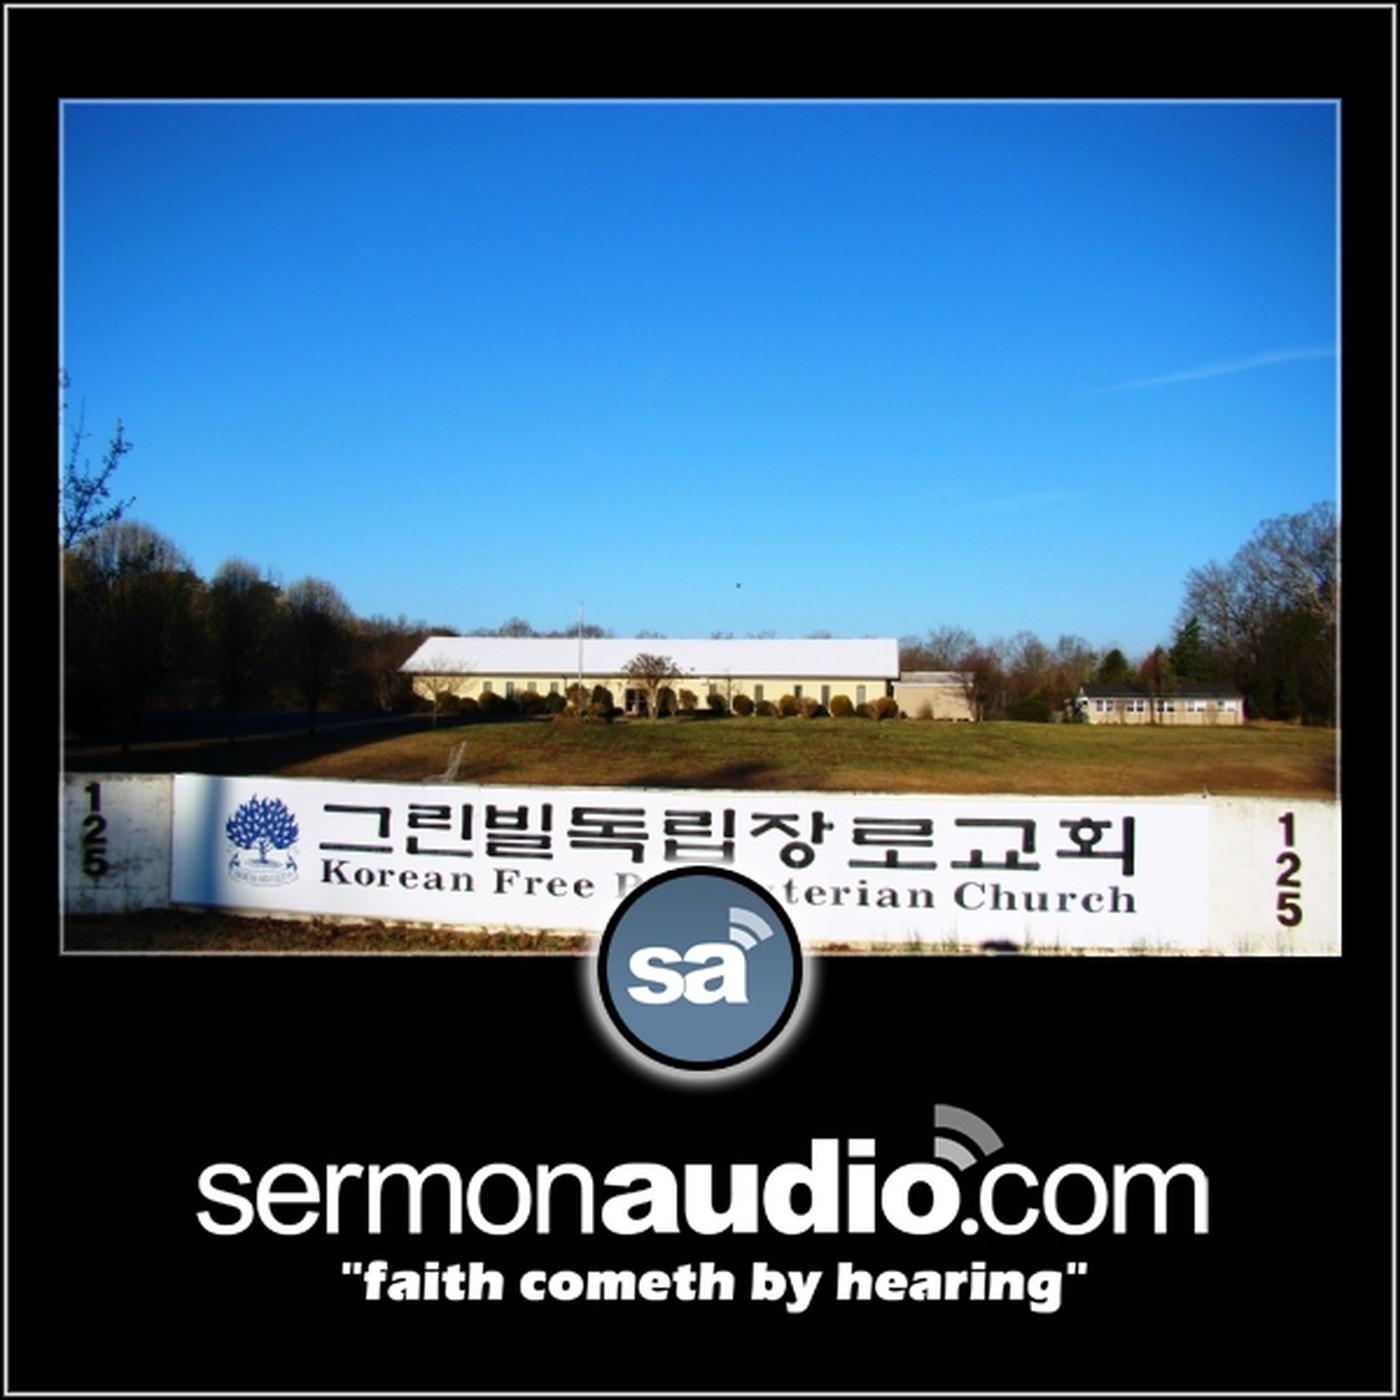 Korean Free Presbyterian Church